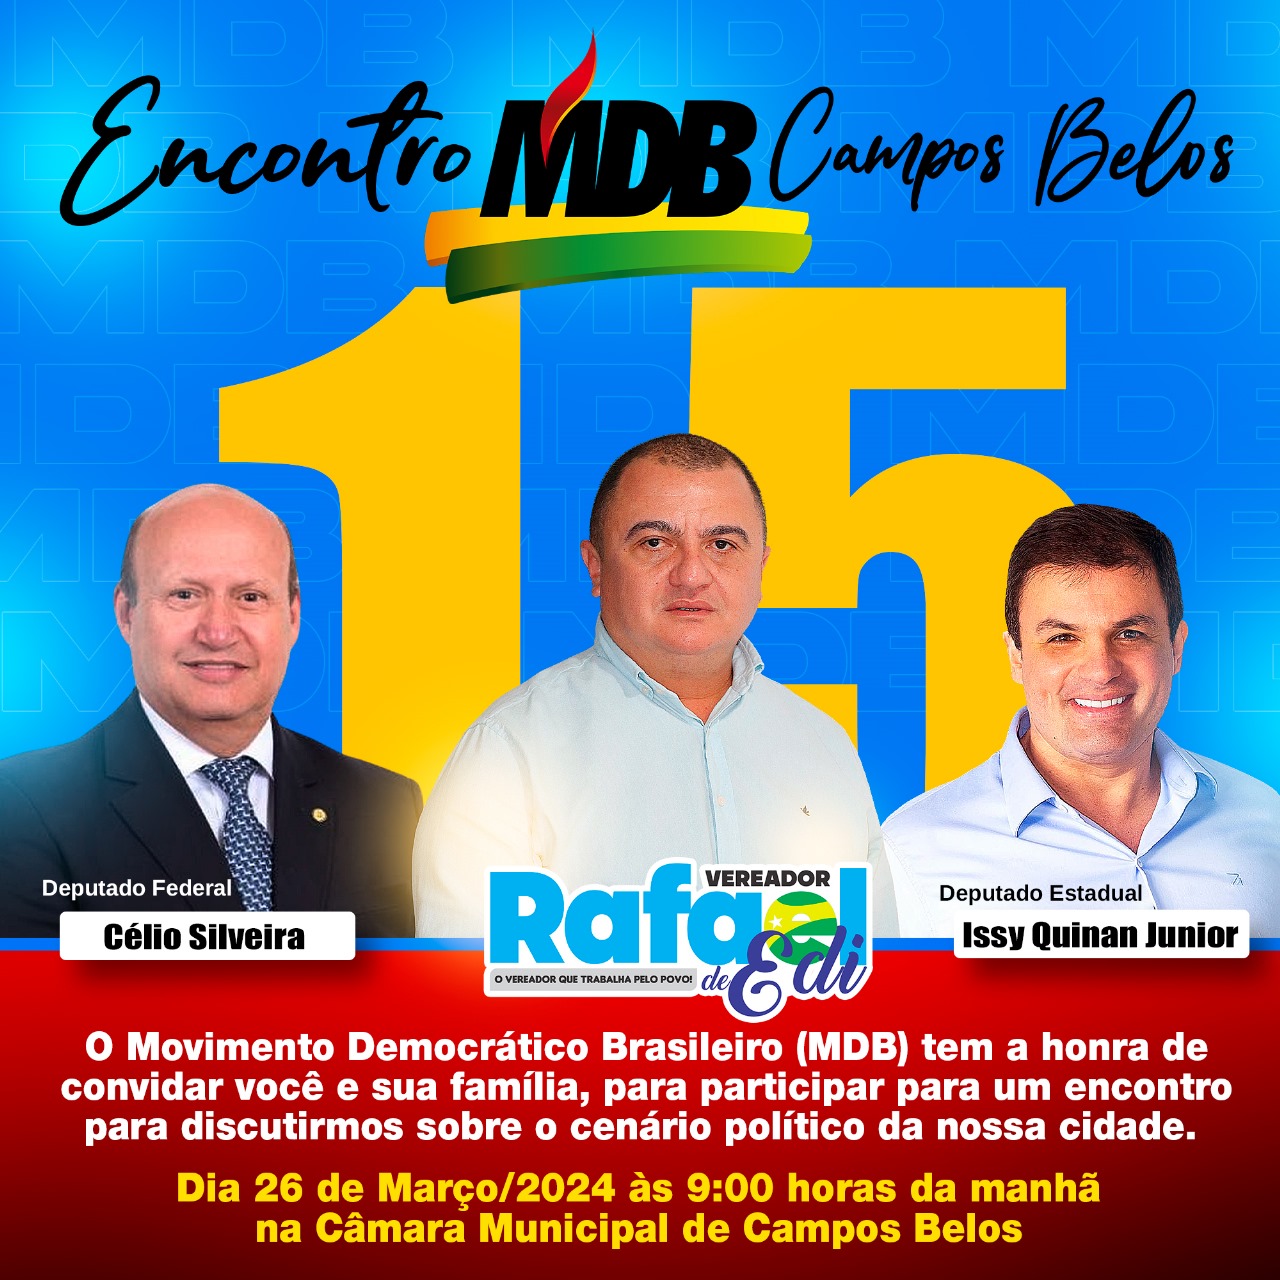 Vice-Governador de Goiás vai a Campos Belos (GO) em apoio a Rafael de Edy